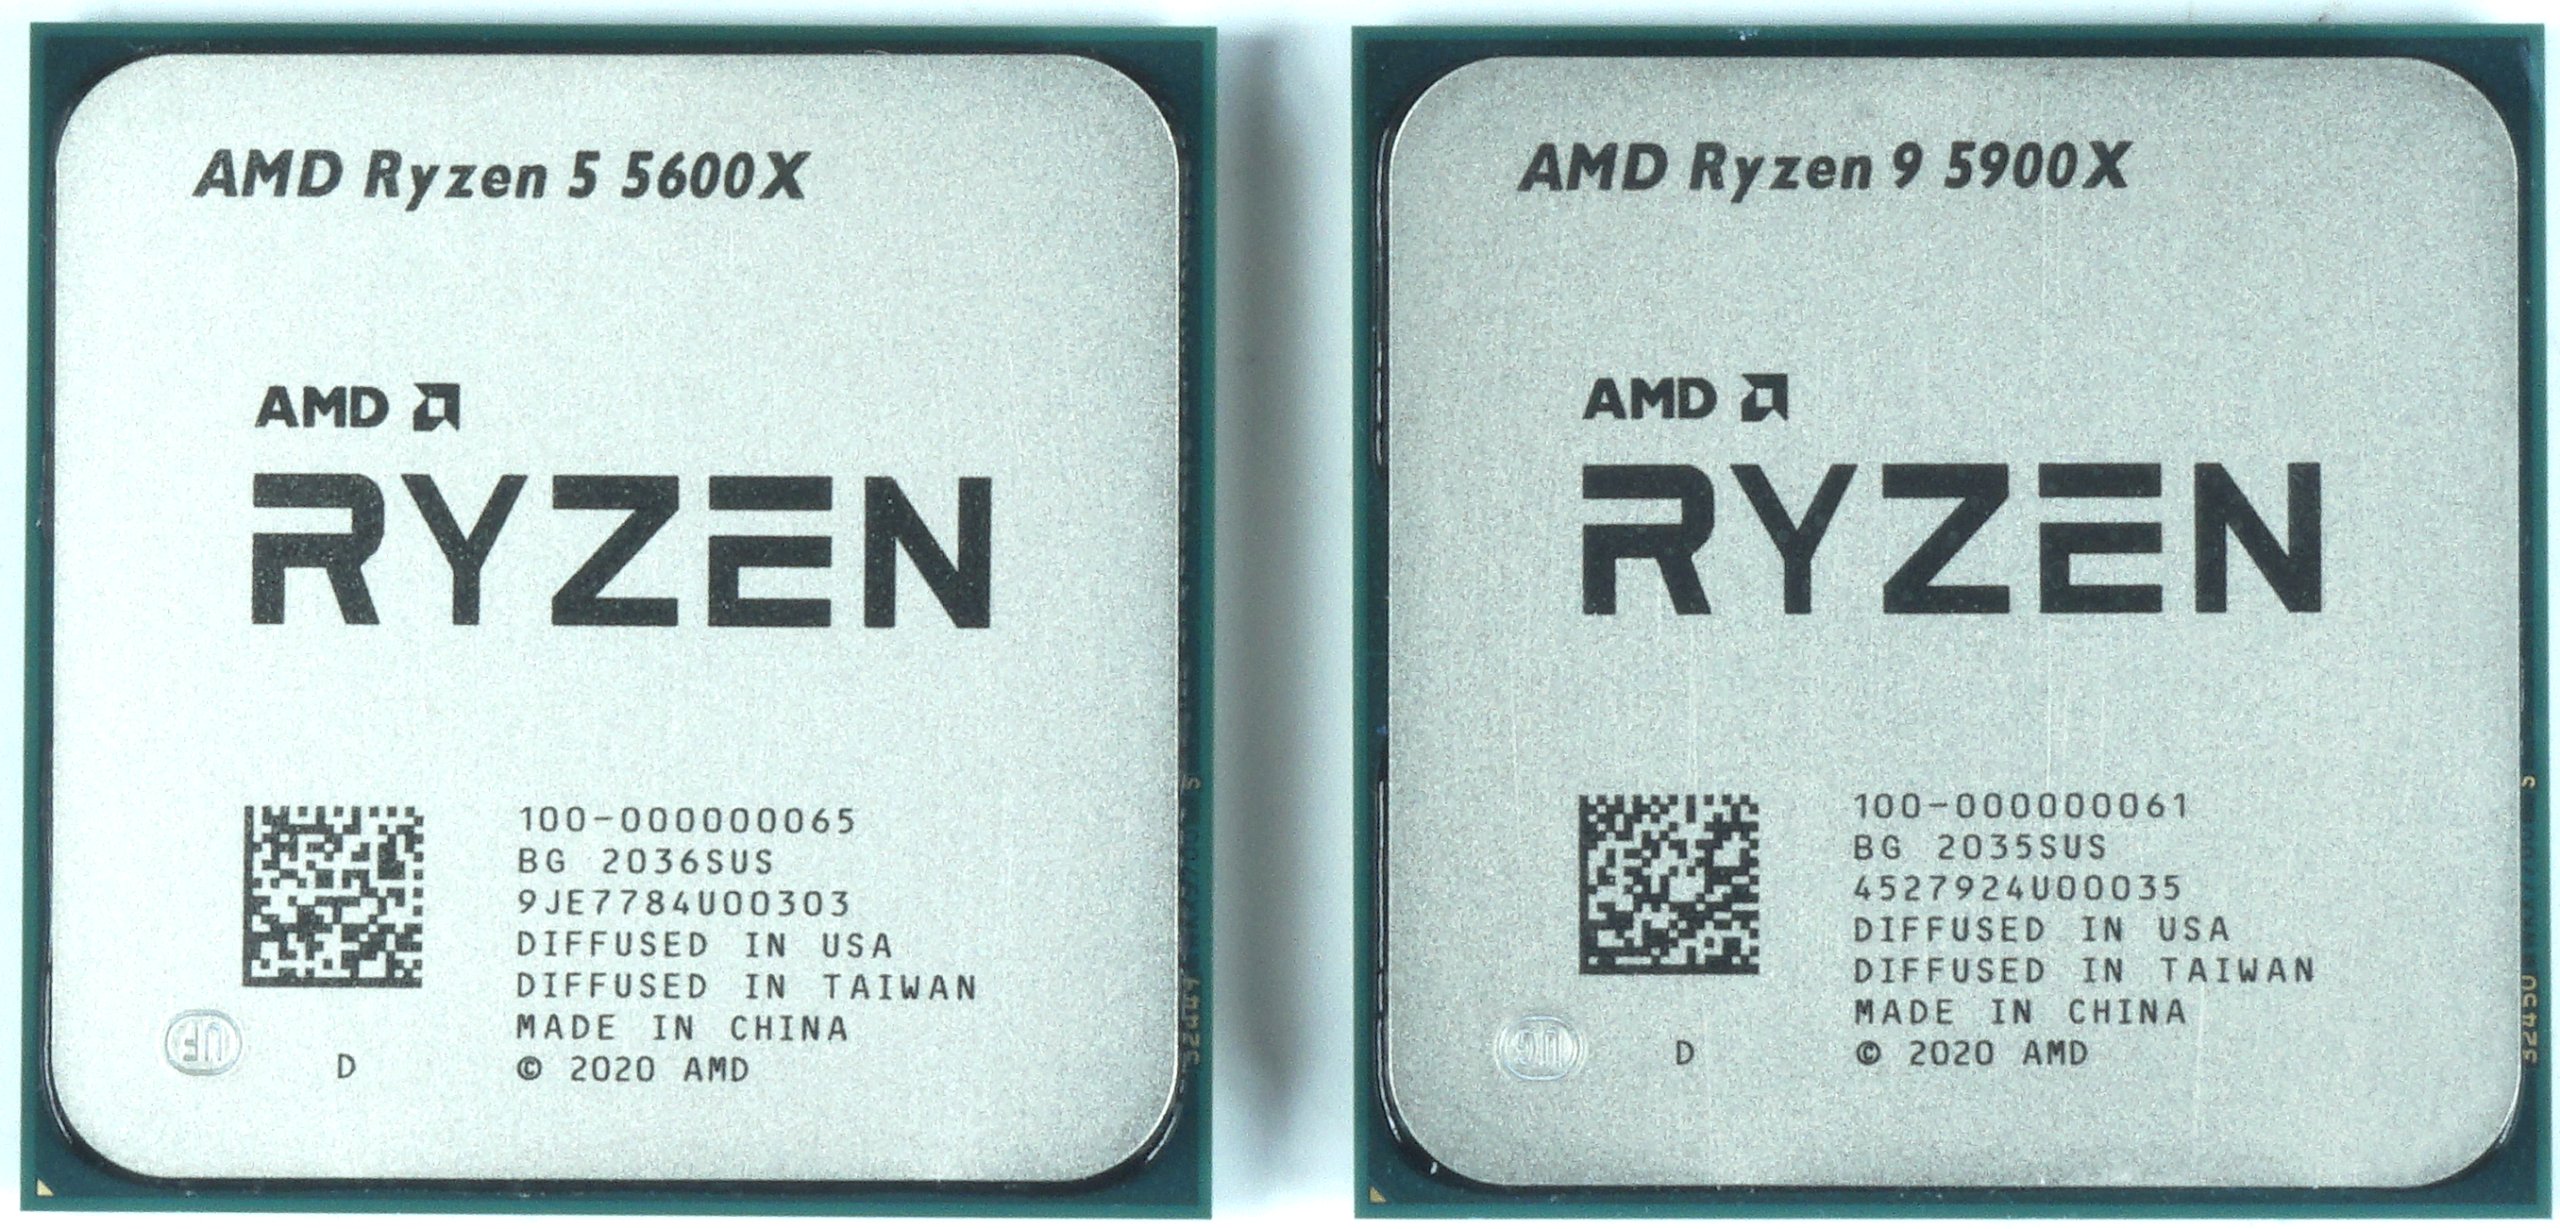 Amd ryzen 5600 x. AMD Ryzen 9 5900x. Процессор AMD Ryzen 5 5600x OEM. Ryzen 7 5600x. Процессор AMD Ryzen 5 5600x (100-000000065) OEM.